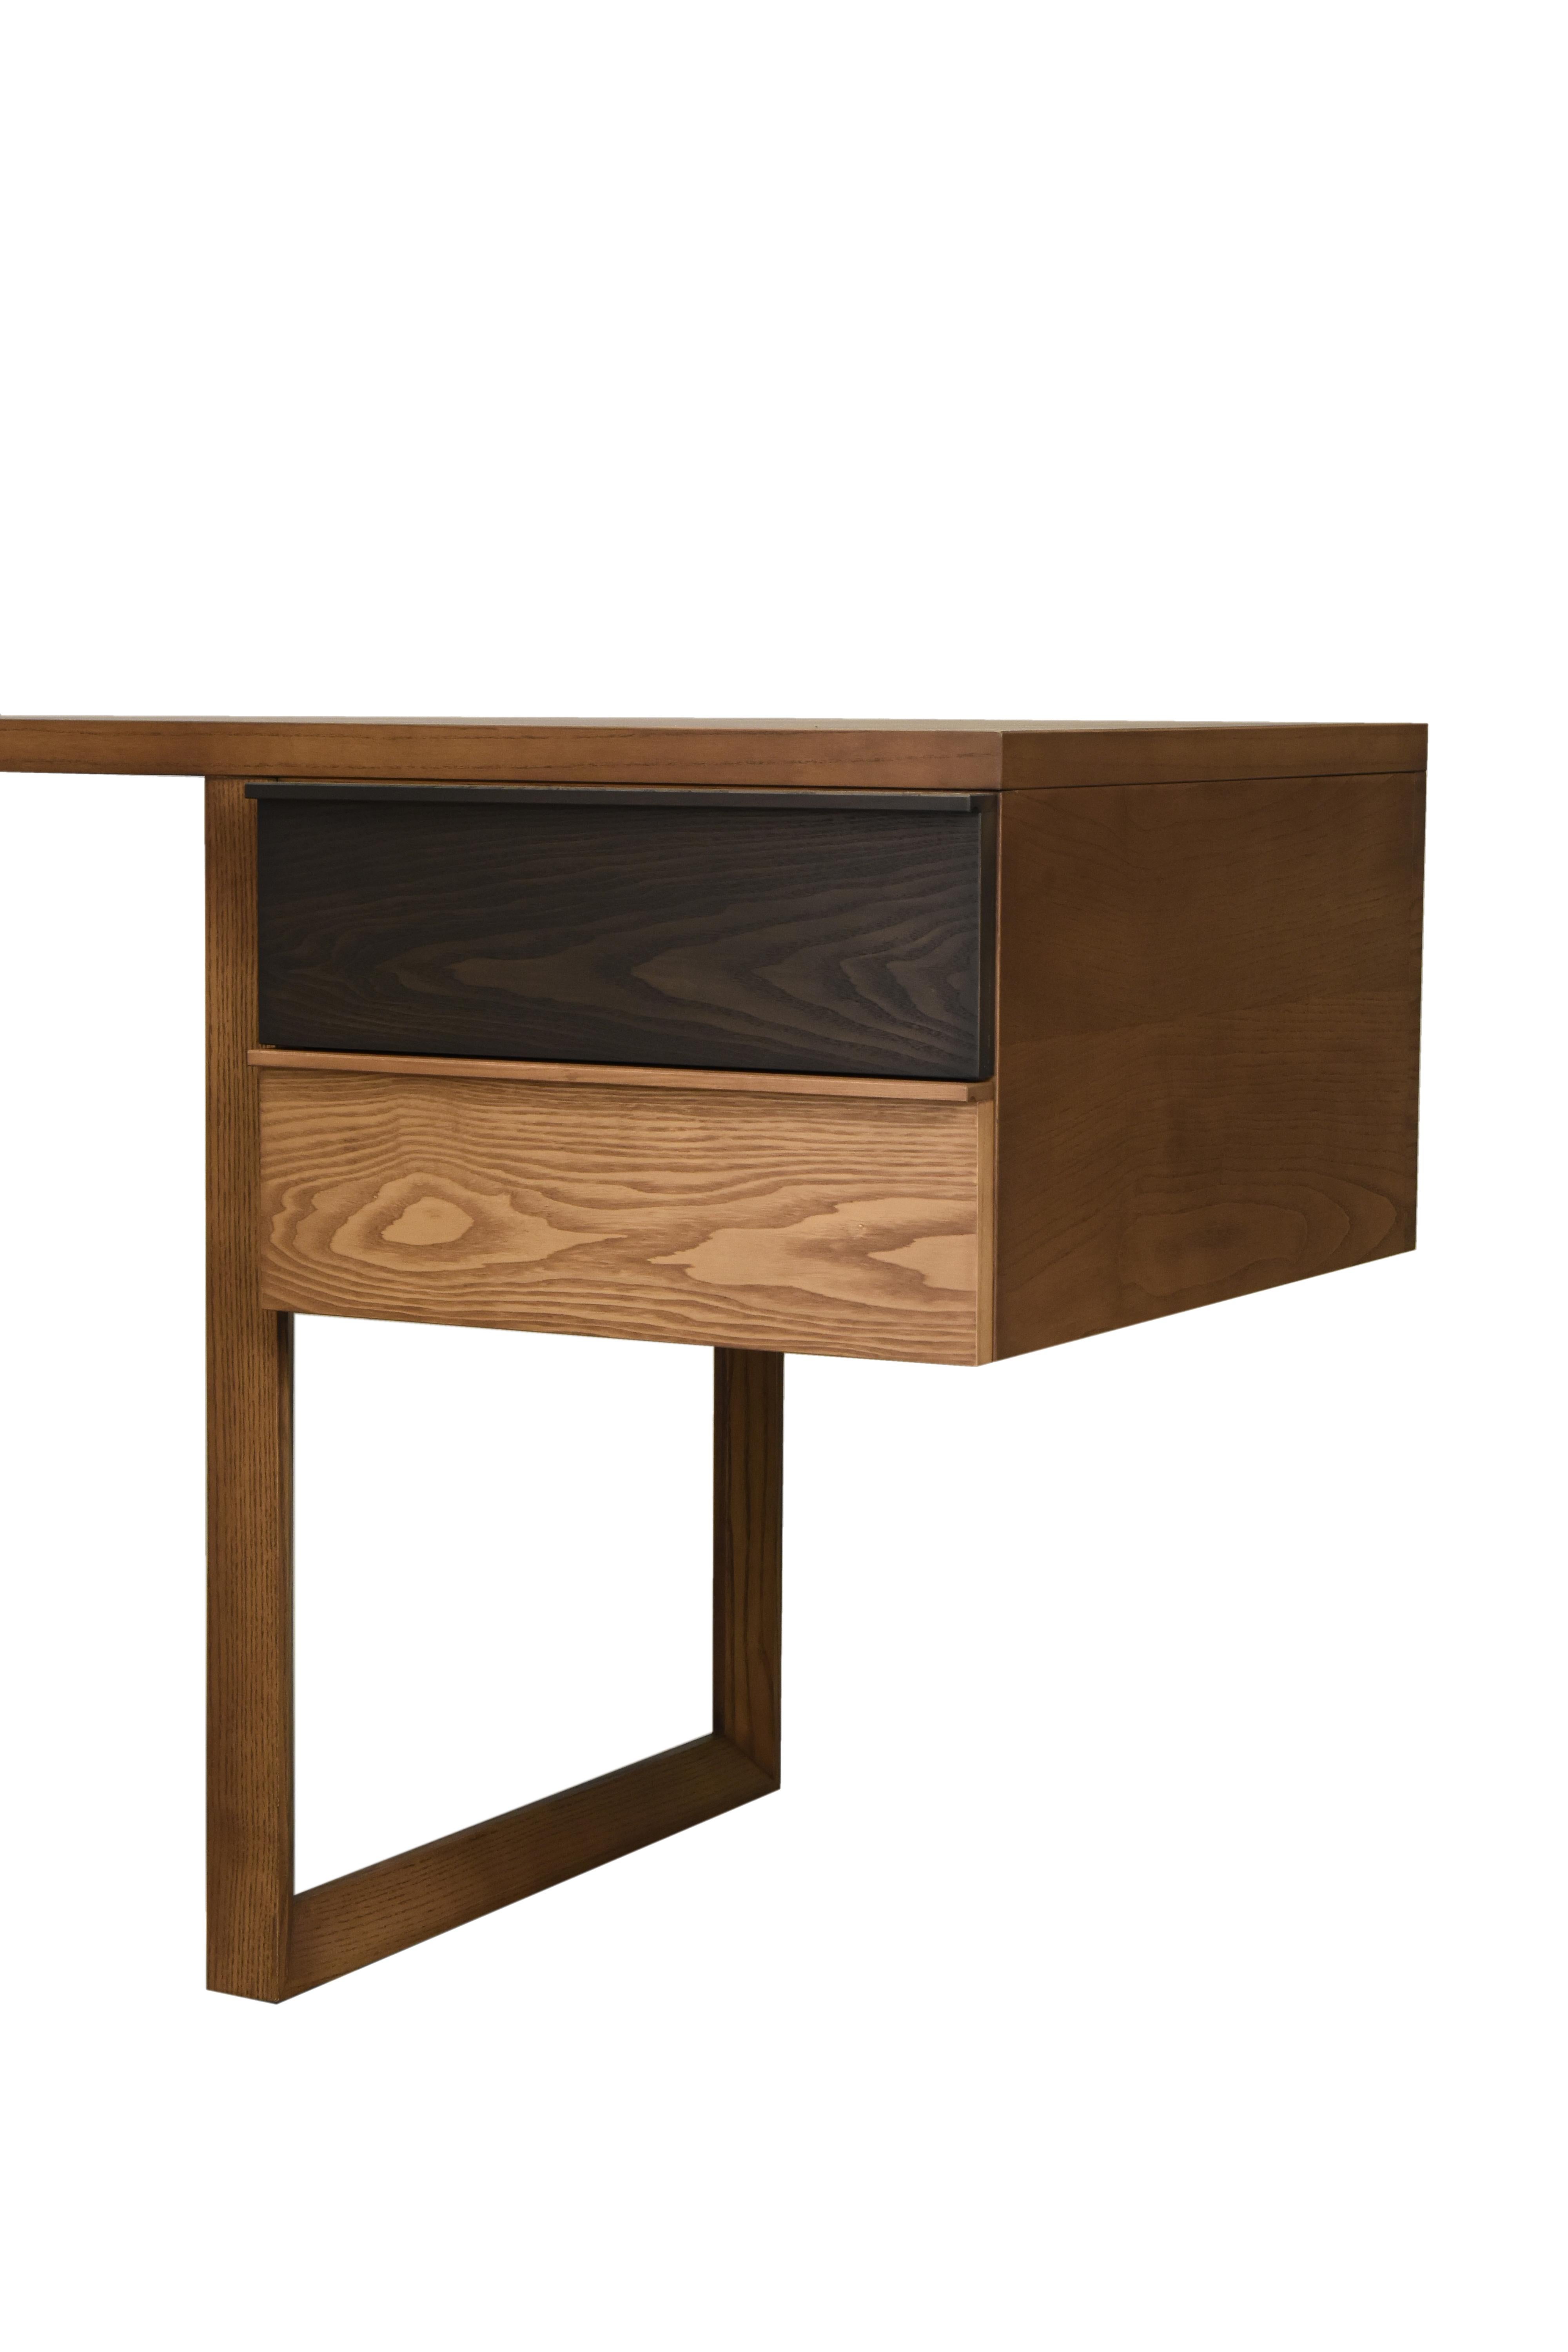 Hand-Crafted Swing by Morelato, Desk Made of Ashwood, Design Libero Rutilo